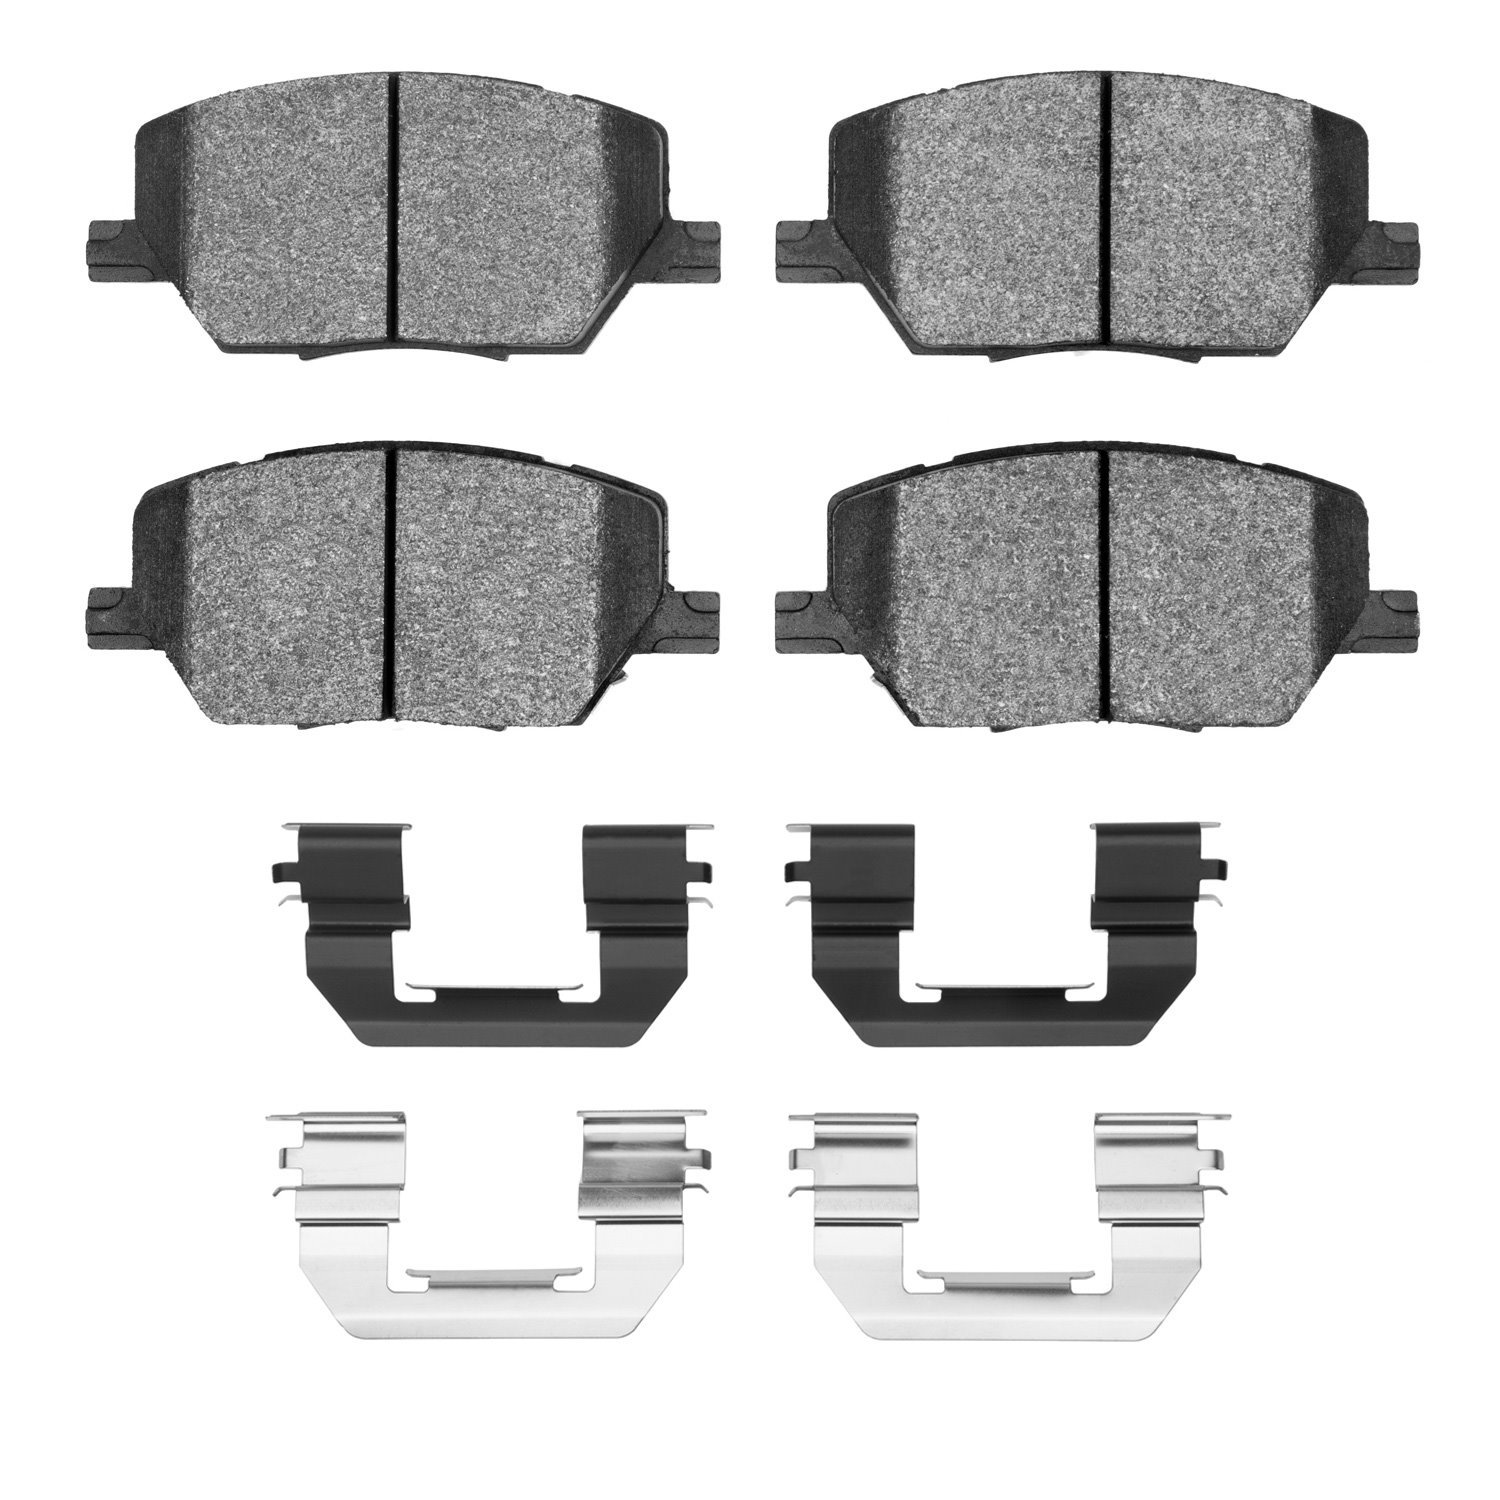 1310-1811-01 3000-Series Ceramic Brake Pads & Hardware Kit, Fits Select Mopar, Position: Front